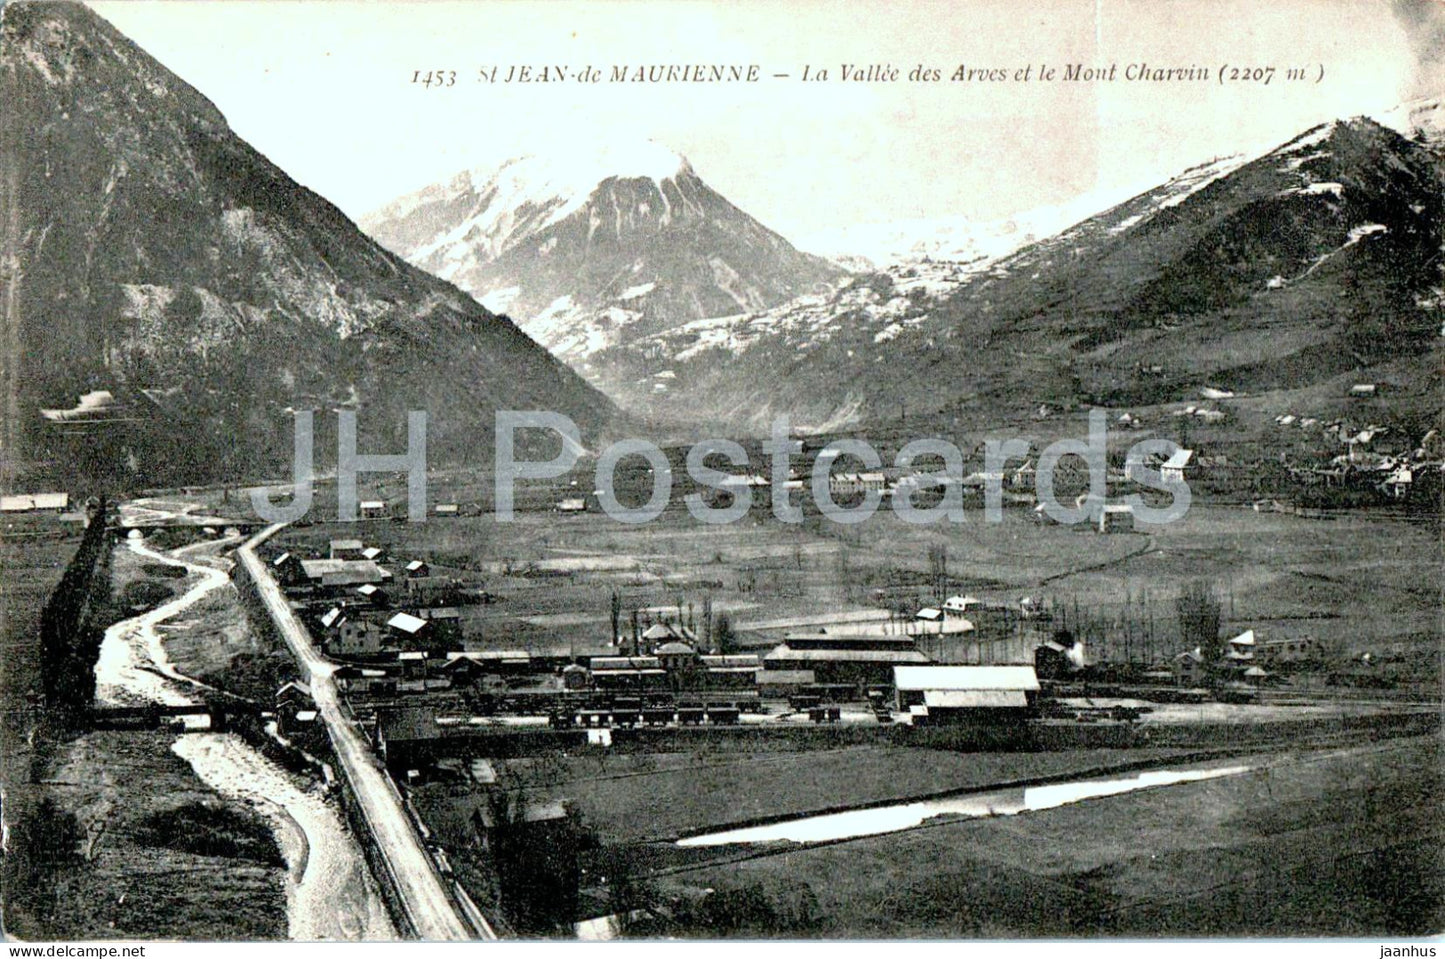 St Jean de Maurienne - La Vallee des Arves et le Mont Charvin 2207 m - 1453 - old postcard - 1938 - France - used - JH Postcards